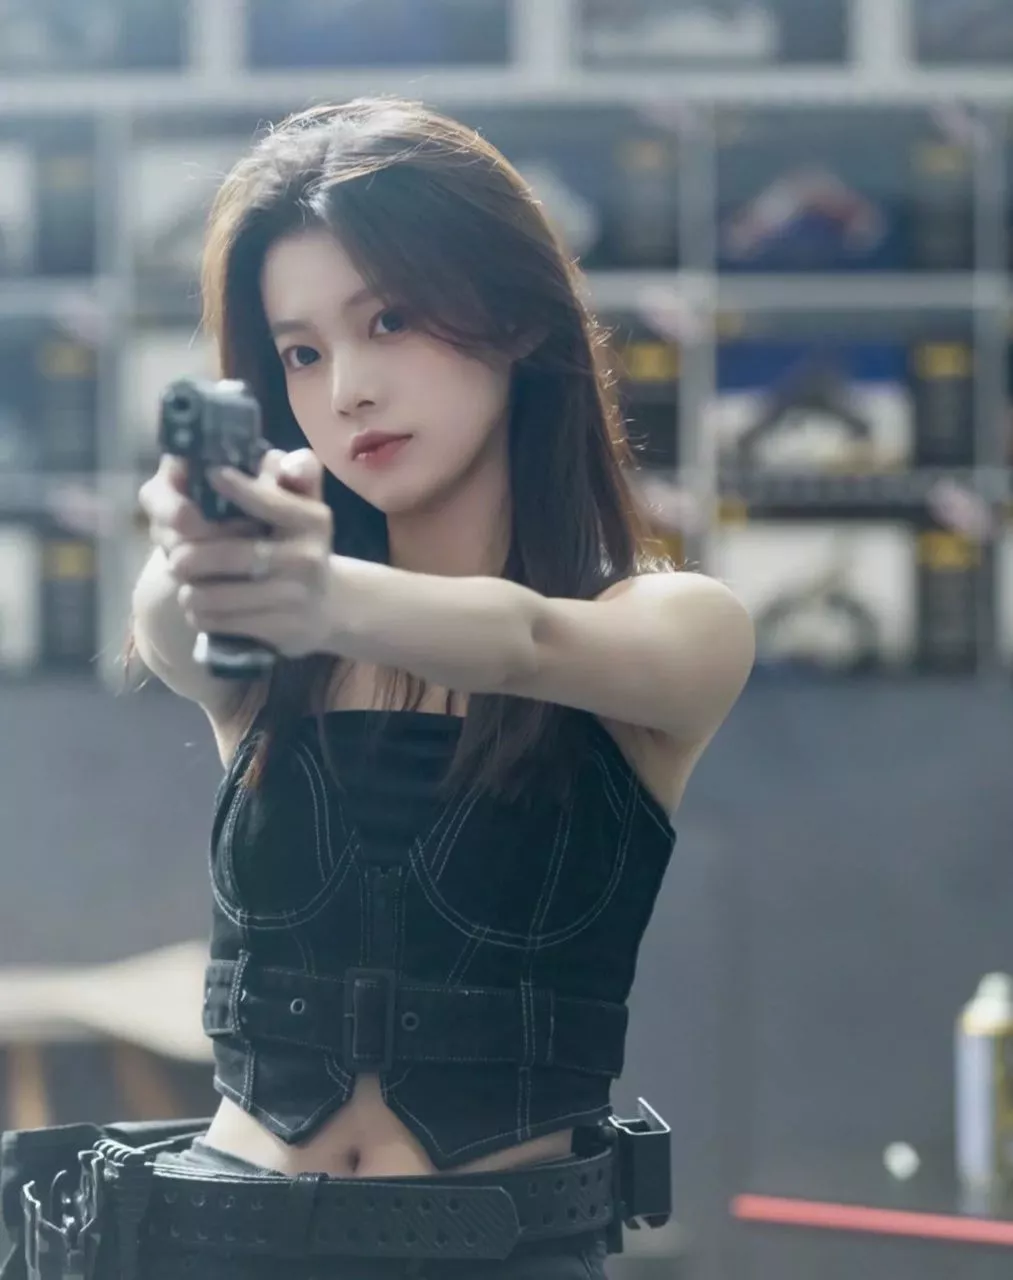 Beautiful woman with a gun.